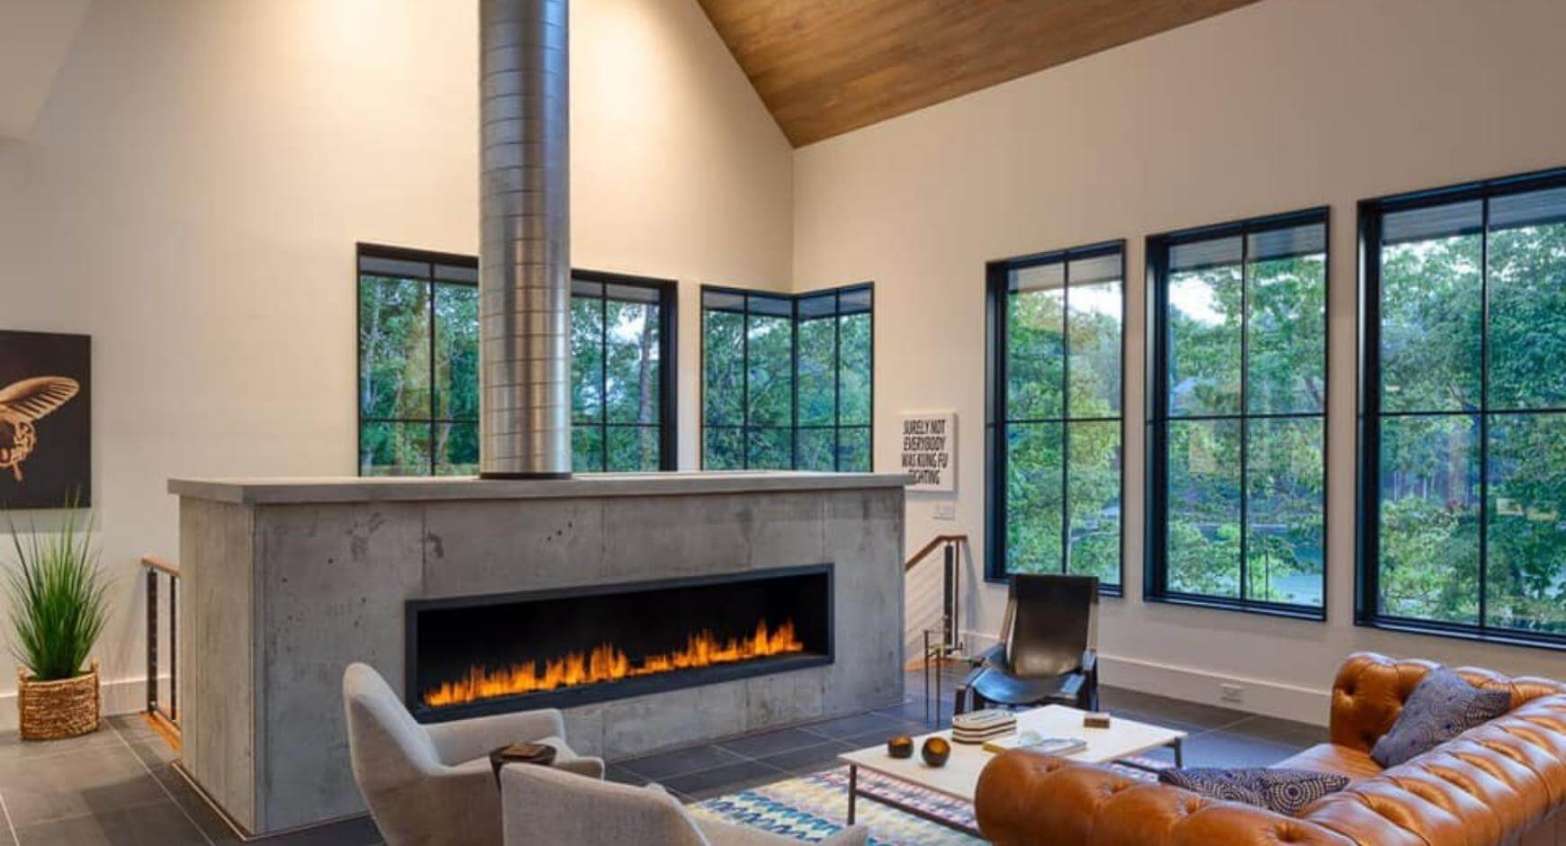 Cozy Cabin Fireplace Ideas - Acucraft Fireplaces